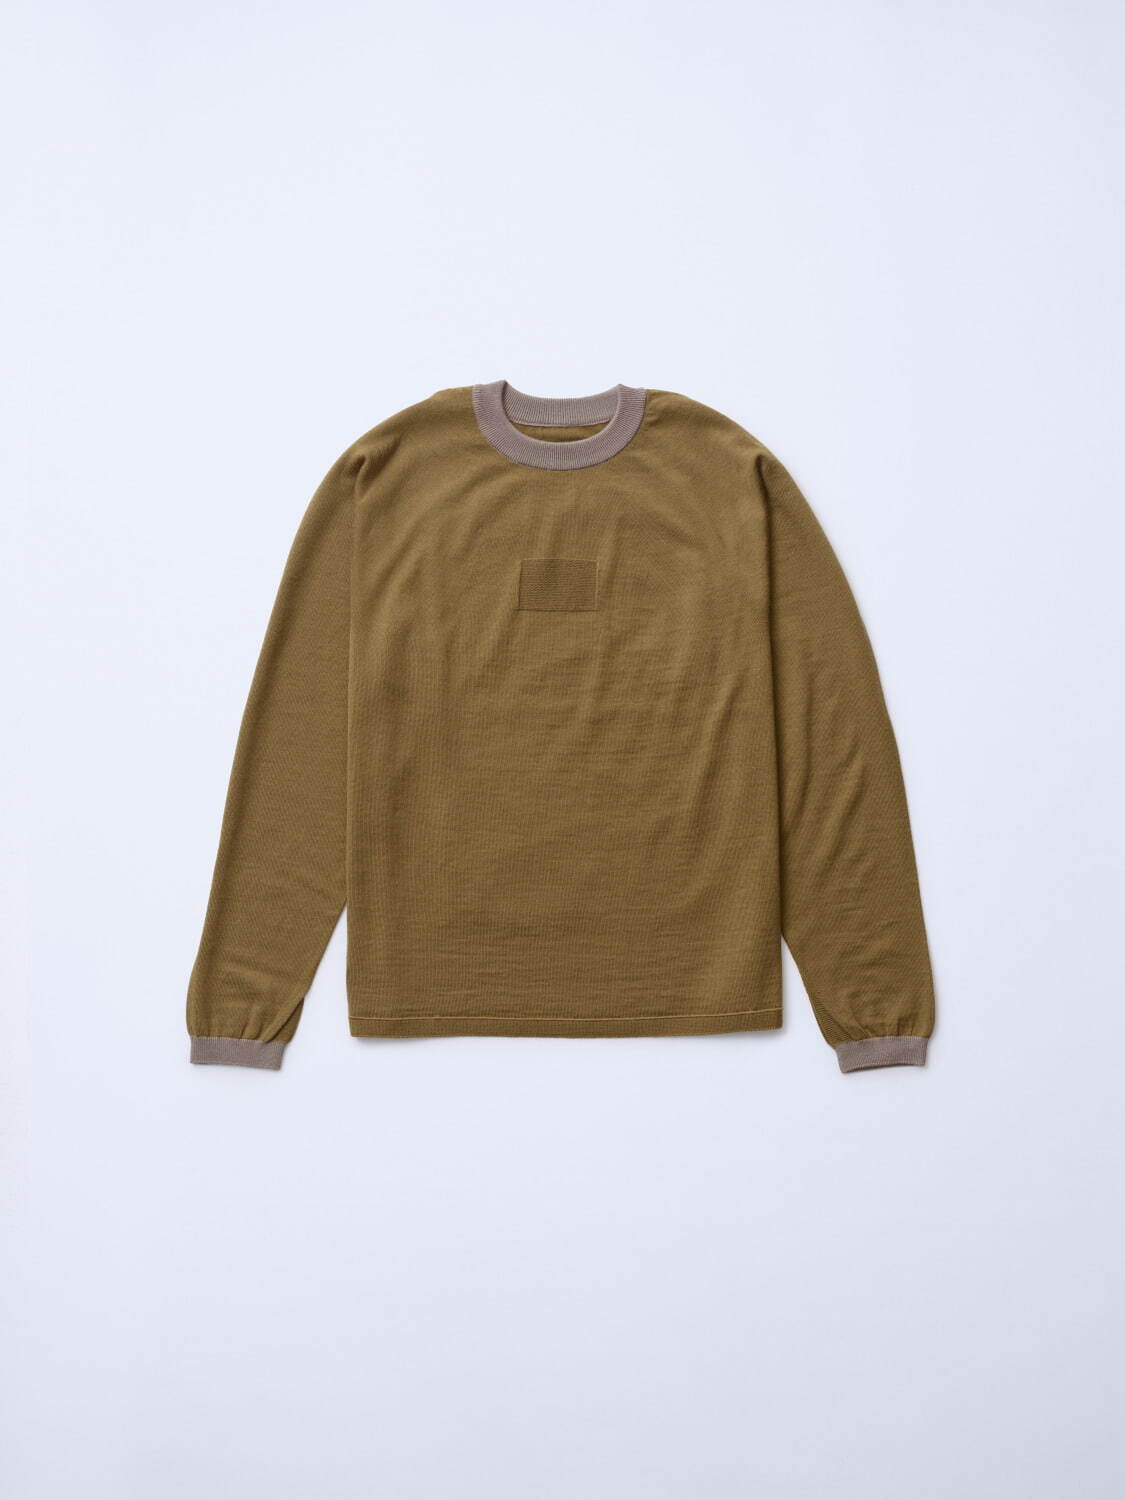 Wool Seamless Knit Top 33,000円